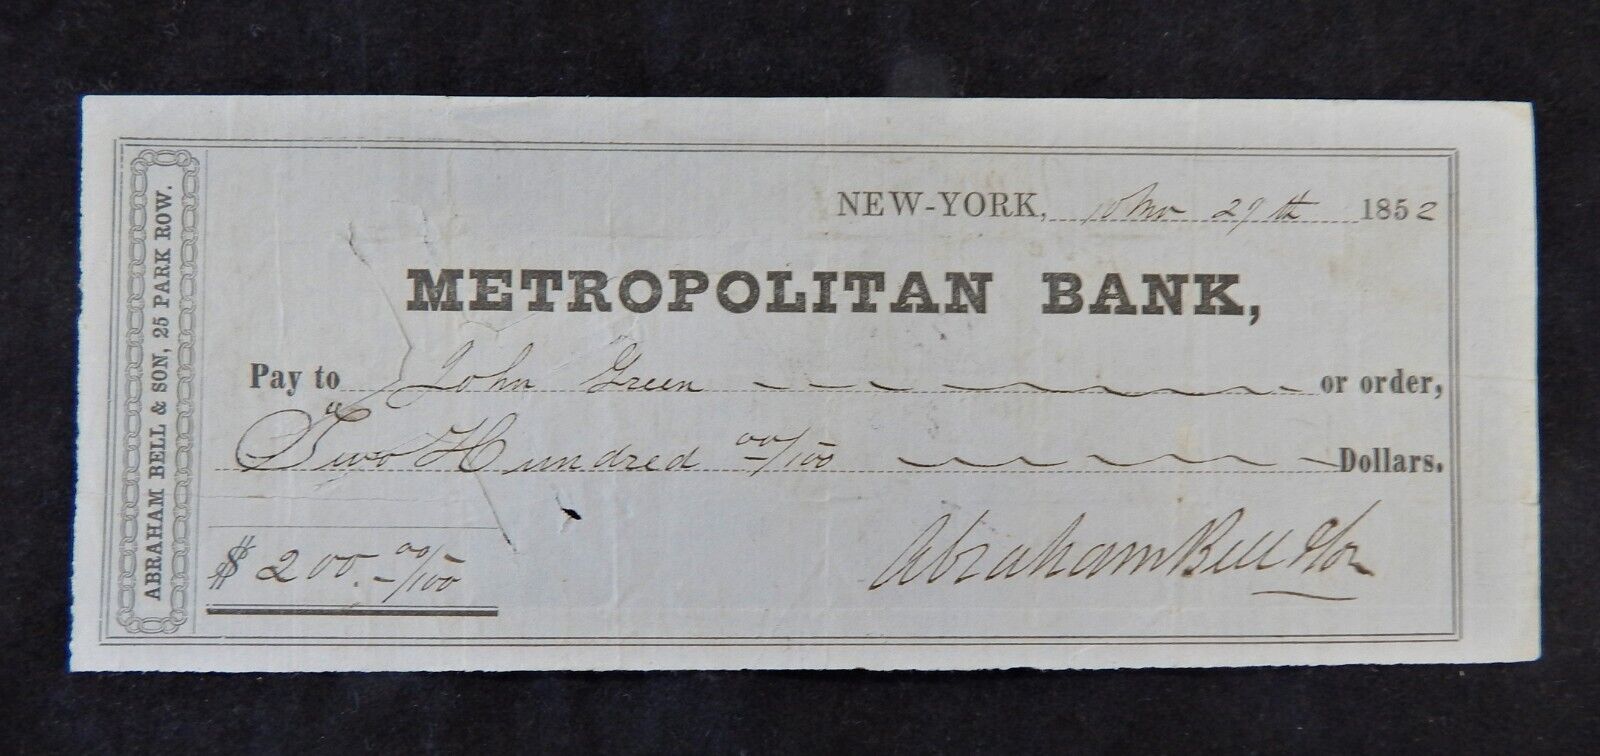 New York Metropolitan Bank Check - Year 1852